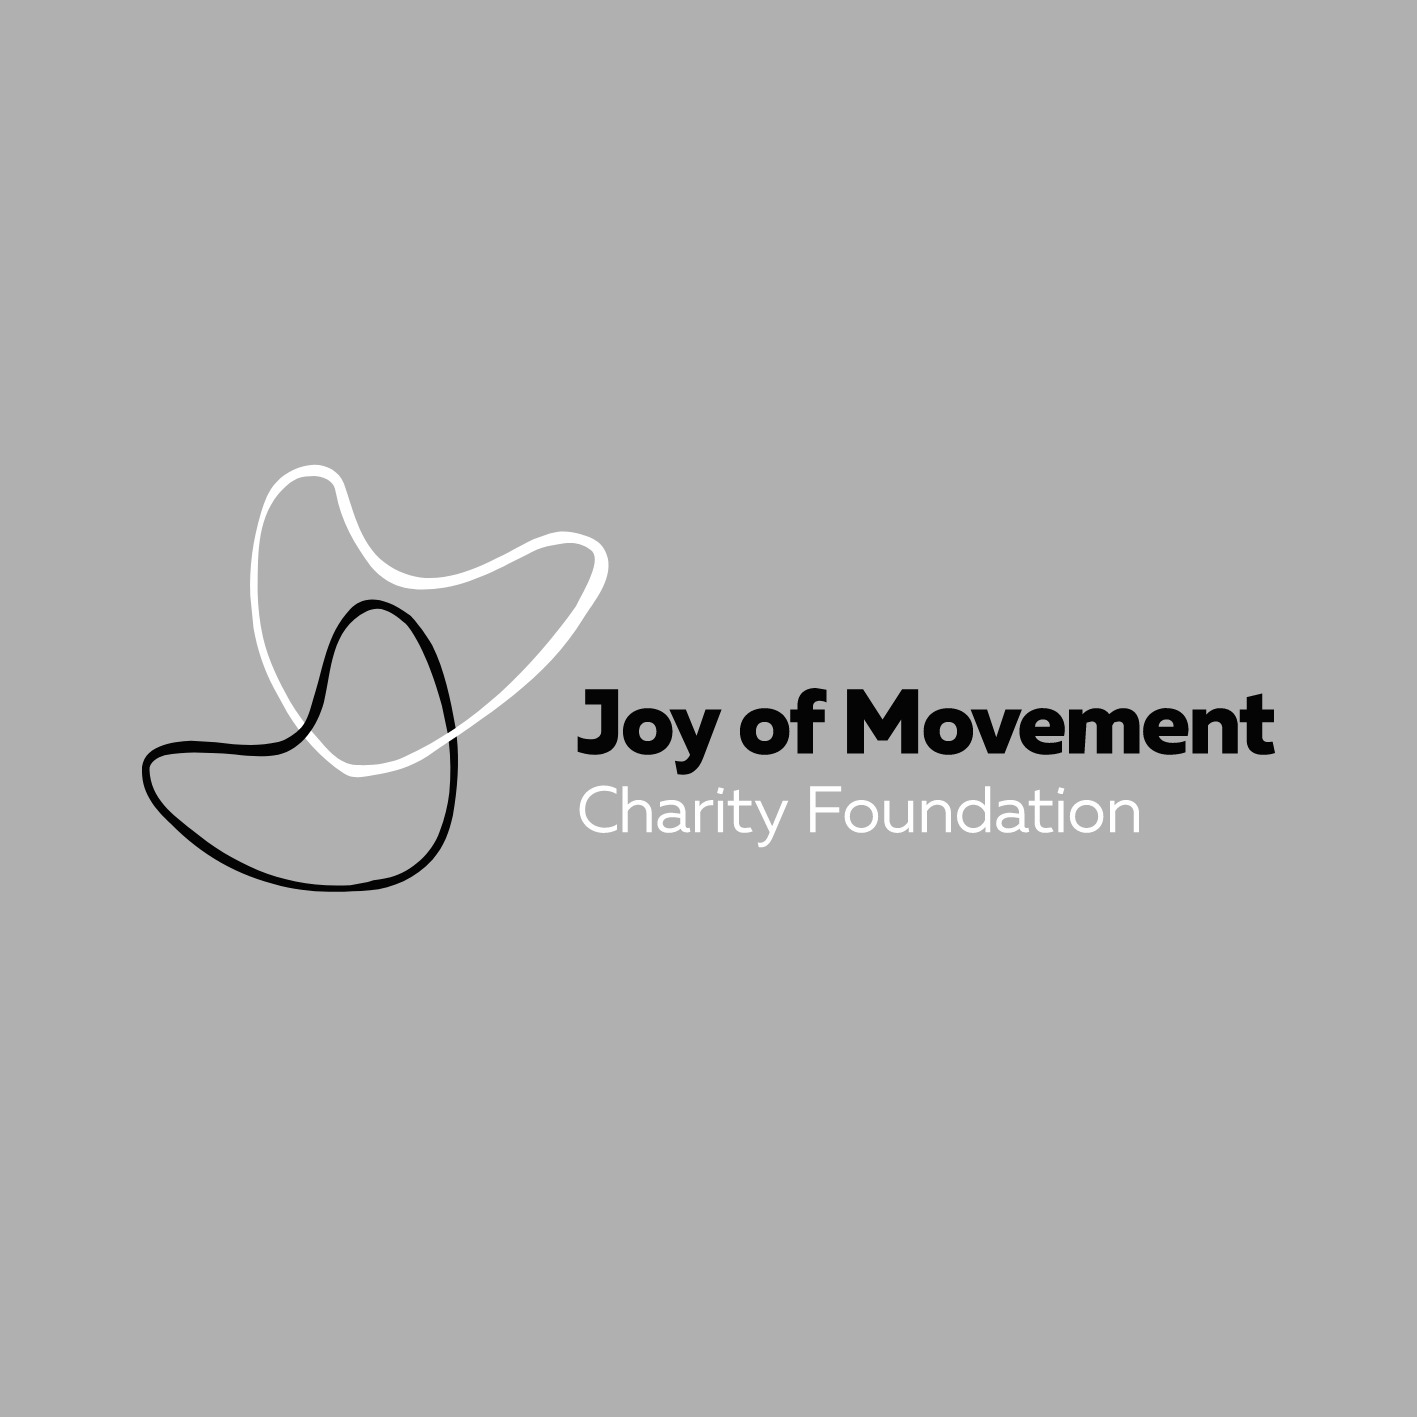 Joy of Movement Charity Foundation